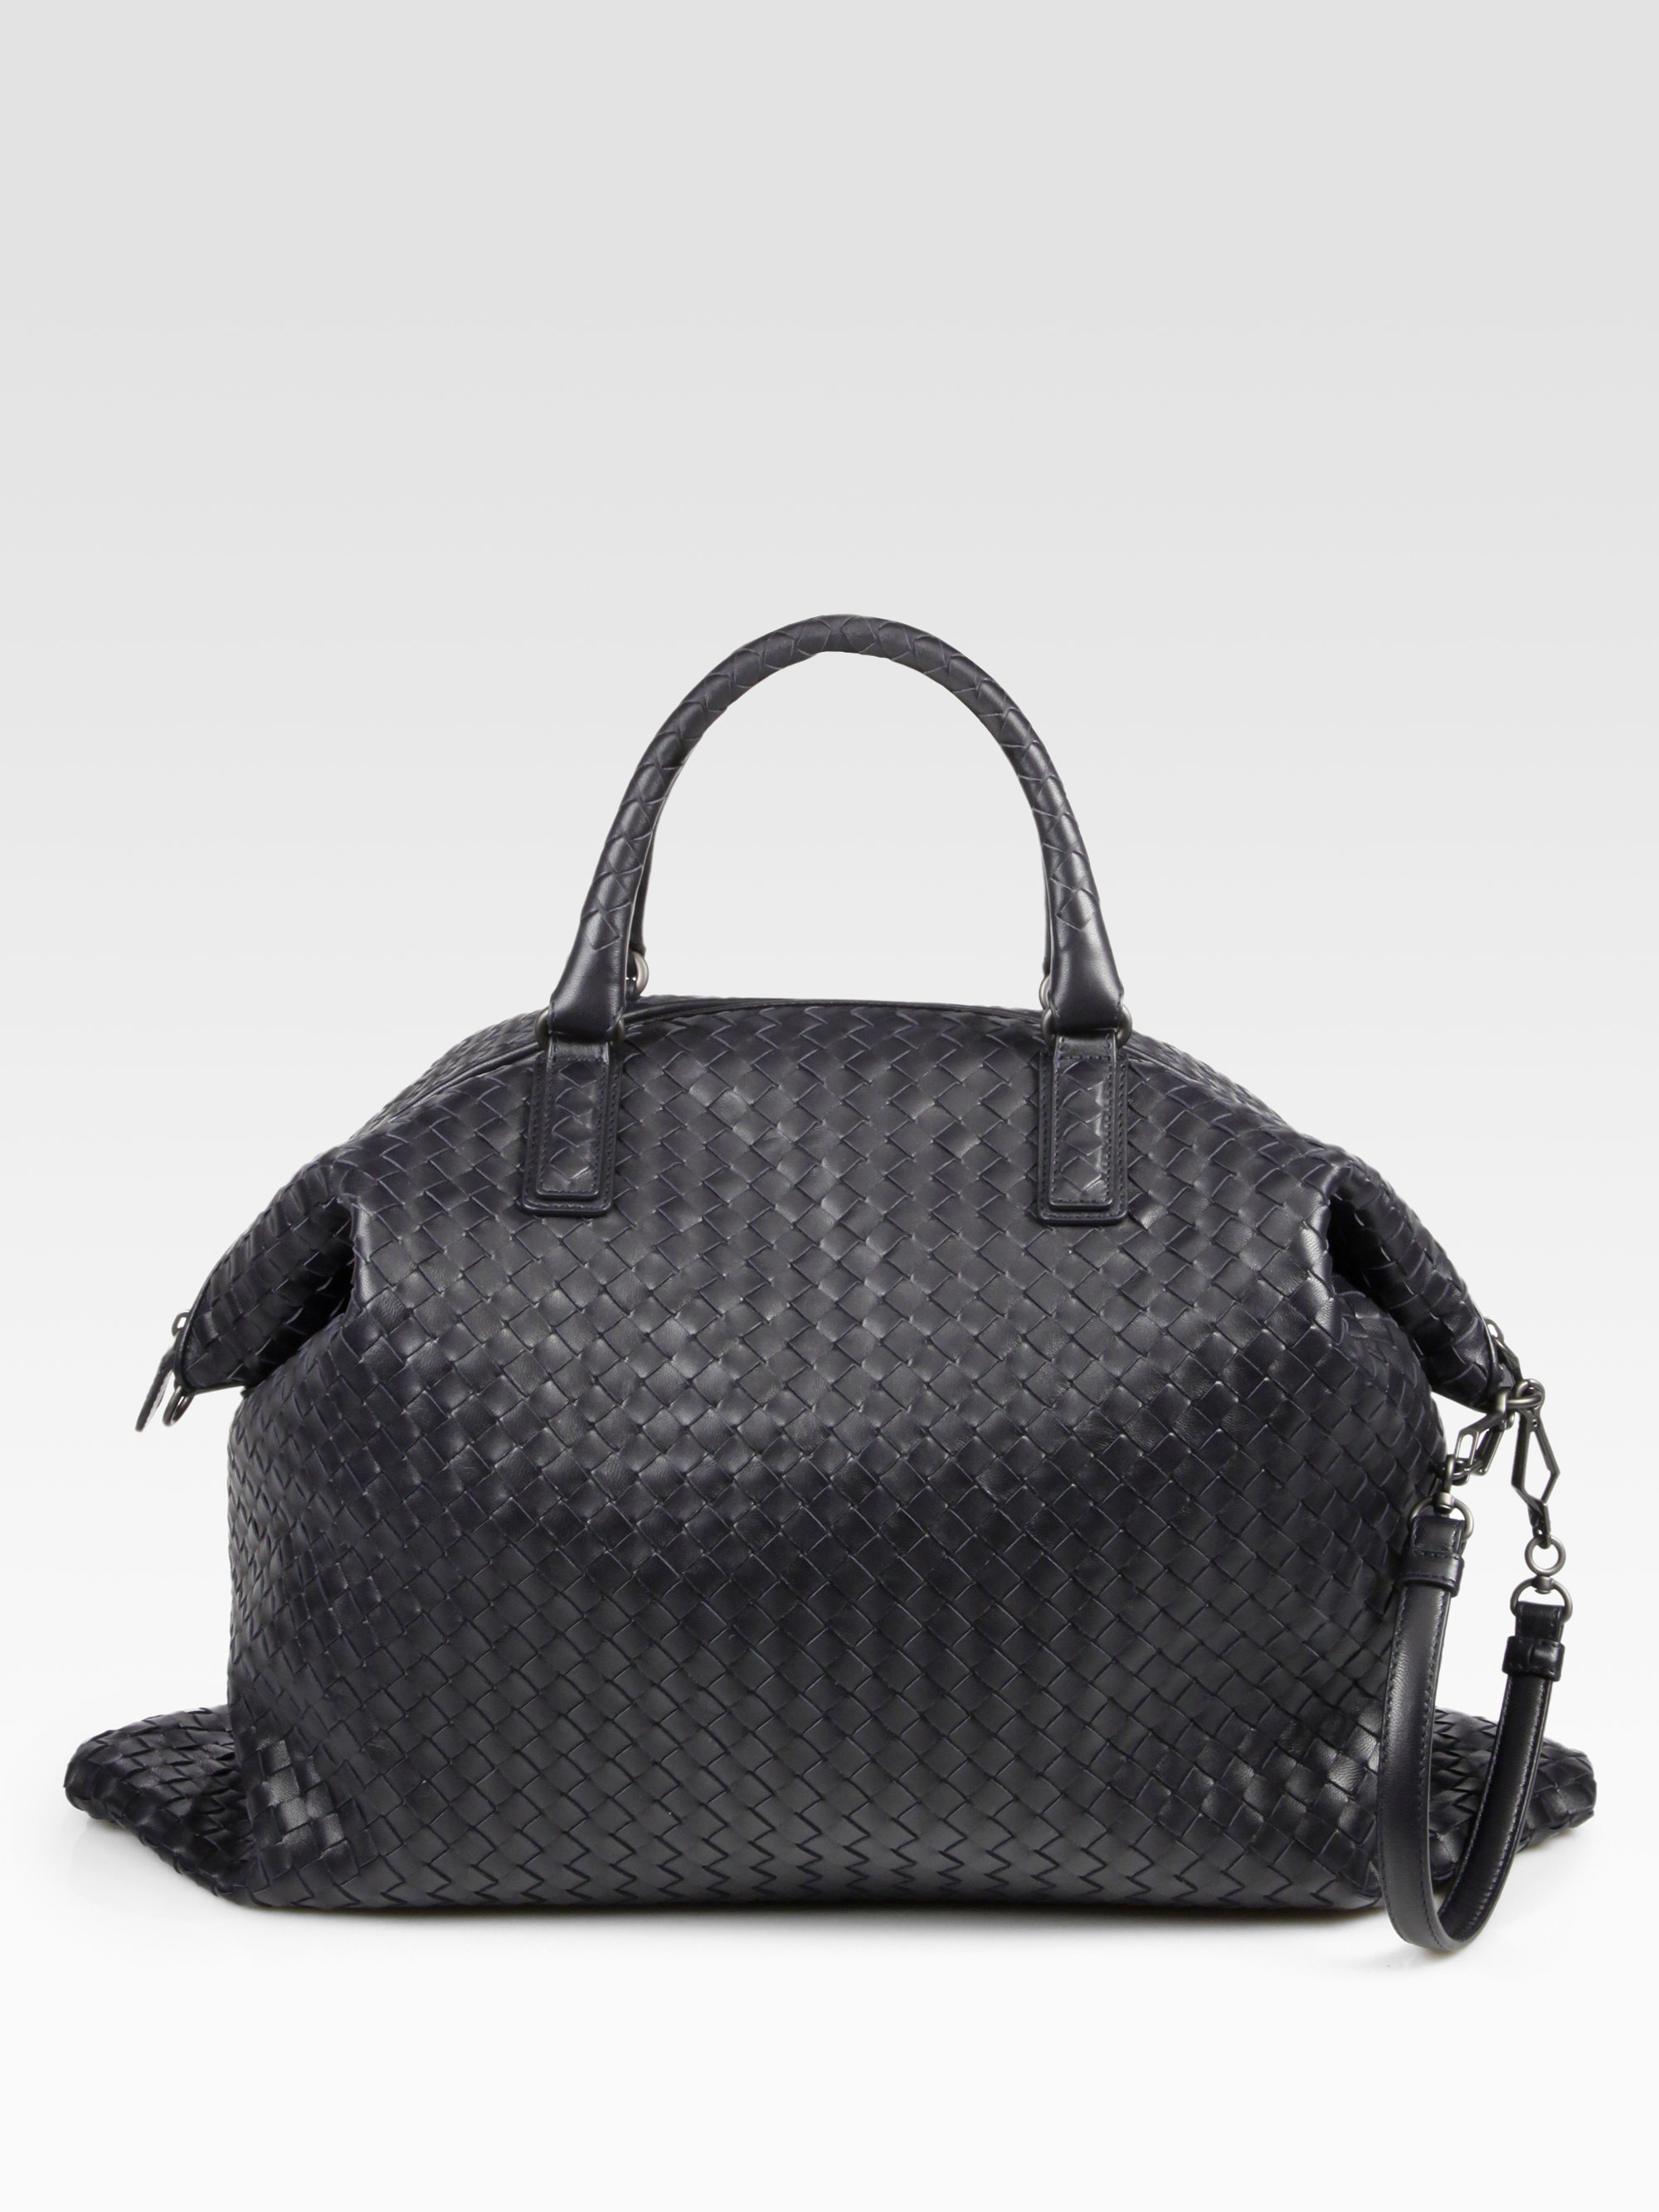 Bottega Veneta Maxi Woven Convertible Tote Bag in Black | Lyst